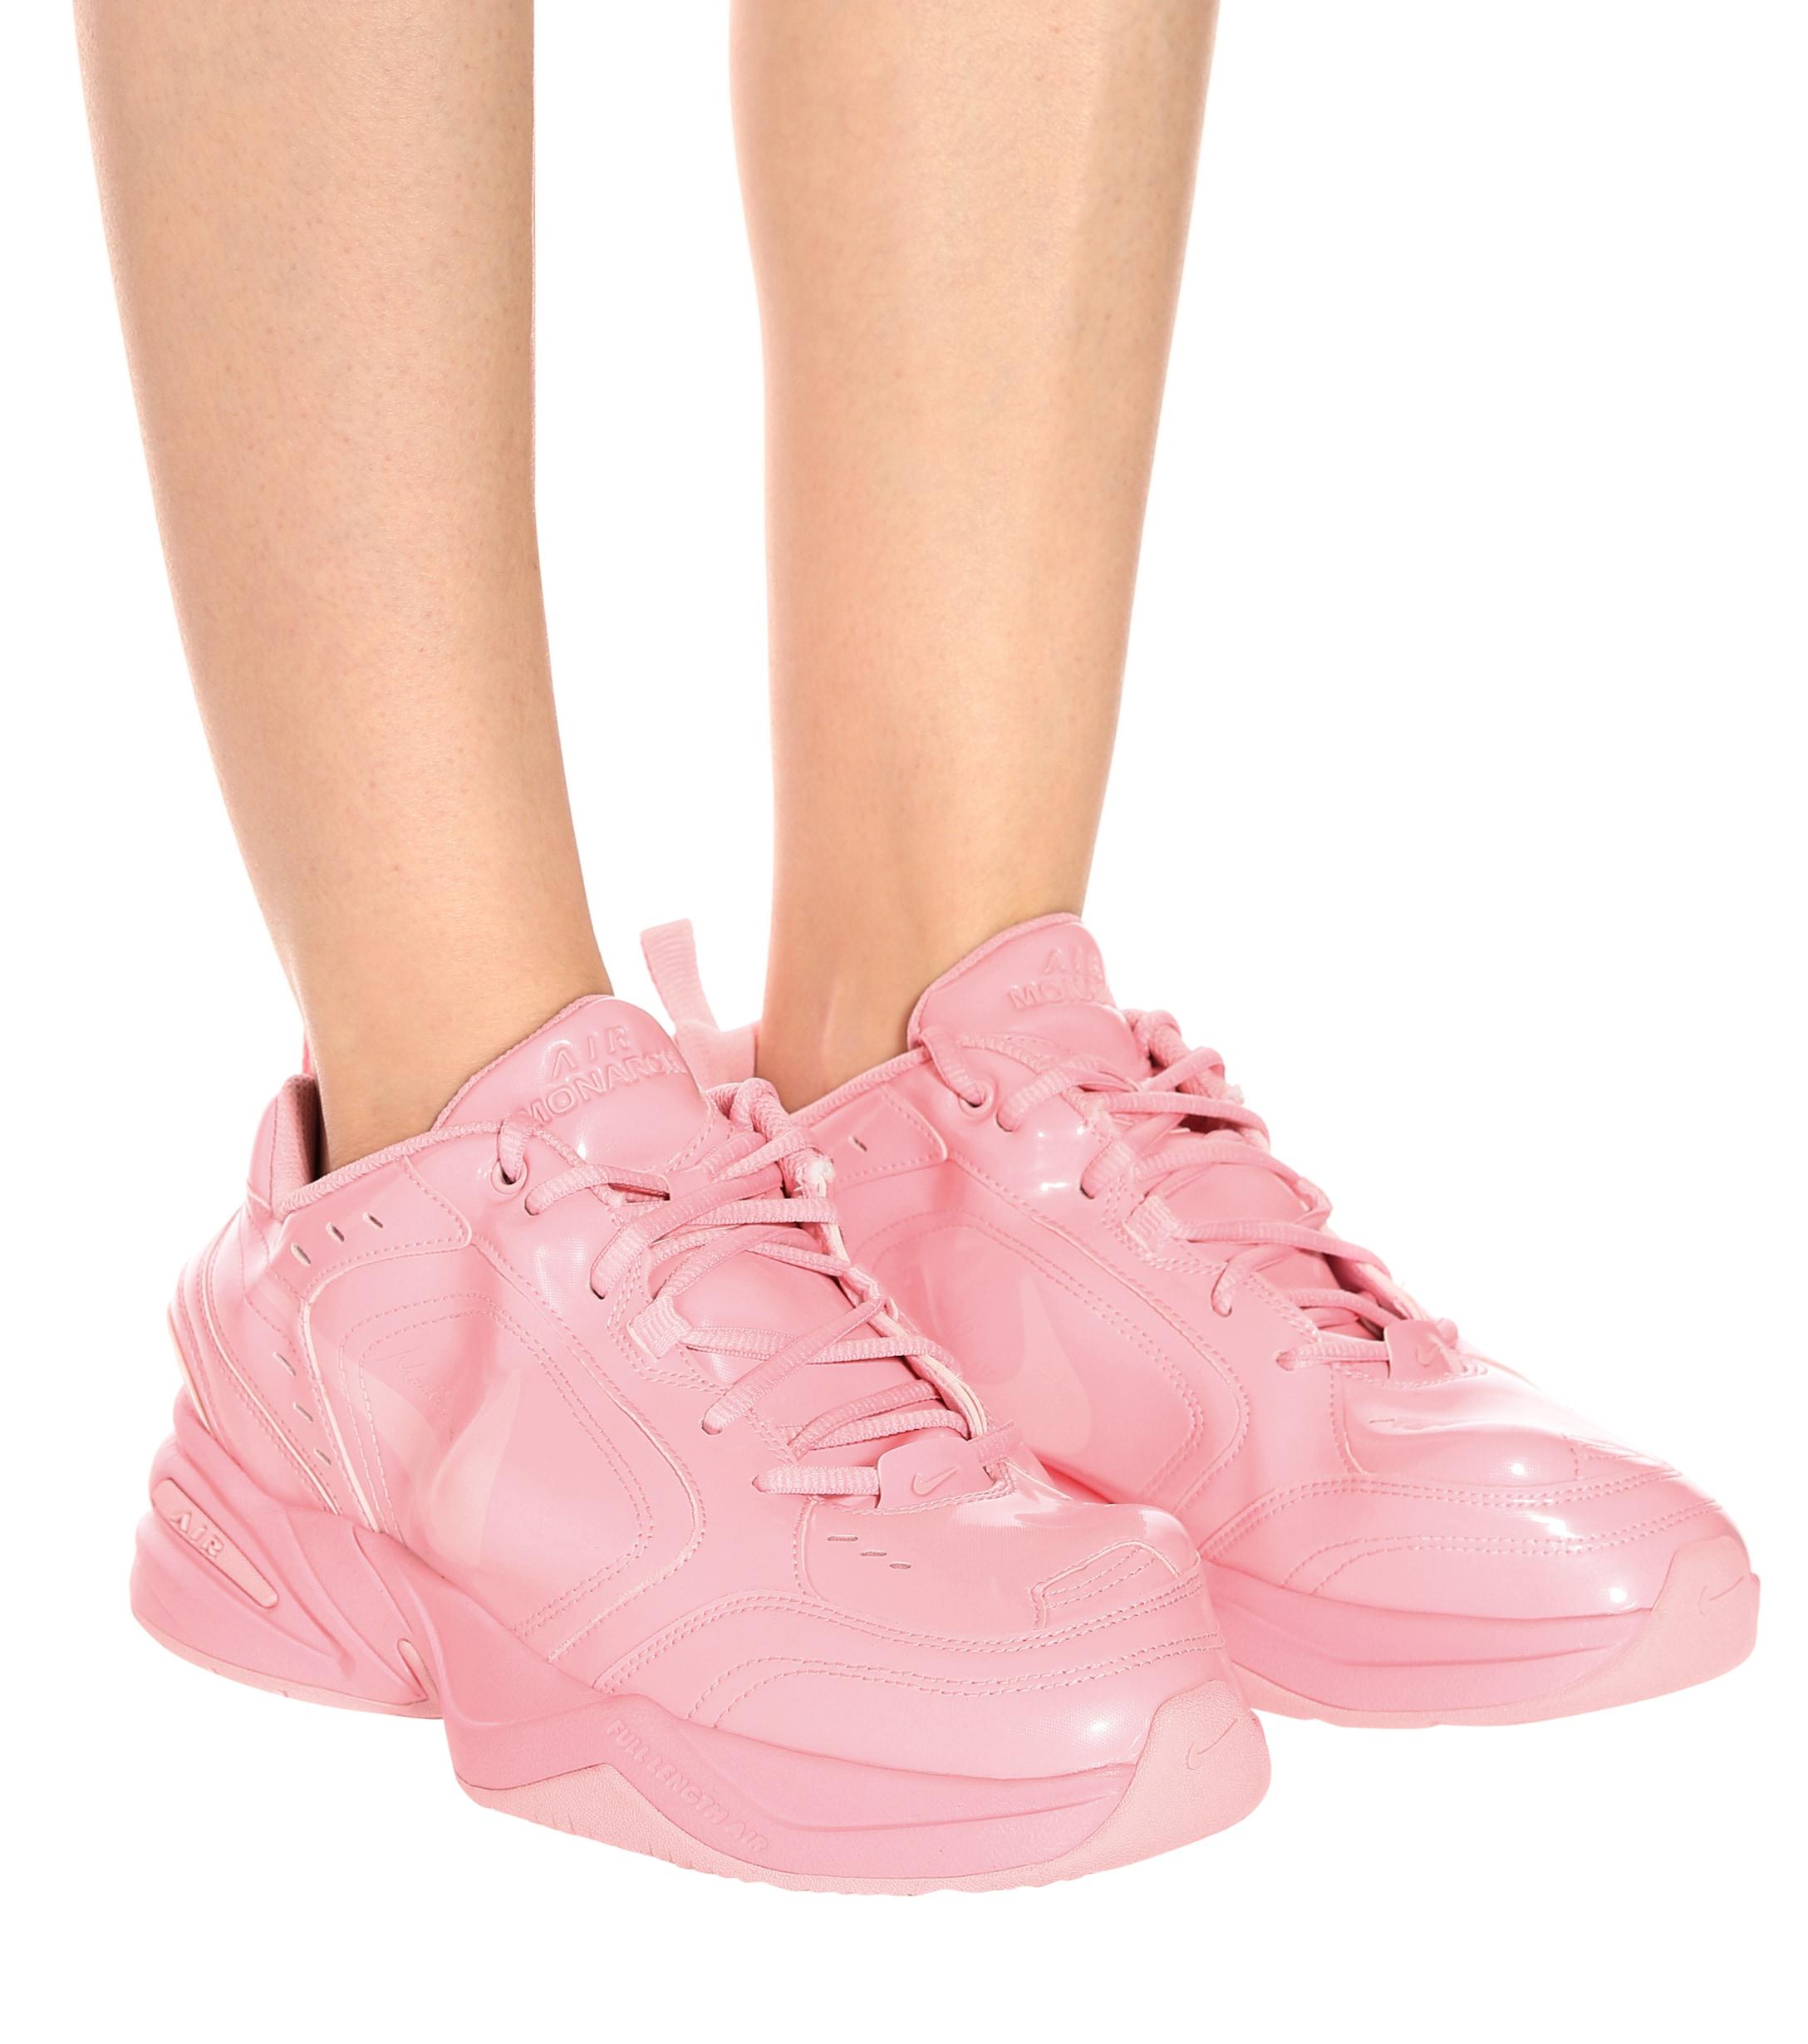 Zapatillas x Martine Rose Air Monarch Nike de color Rosa | Lyst